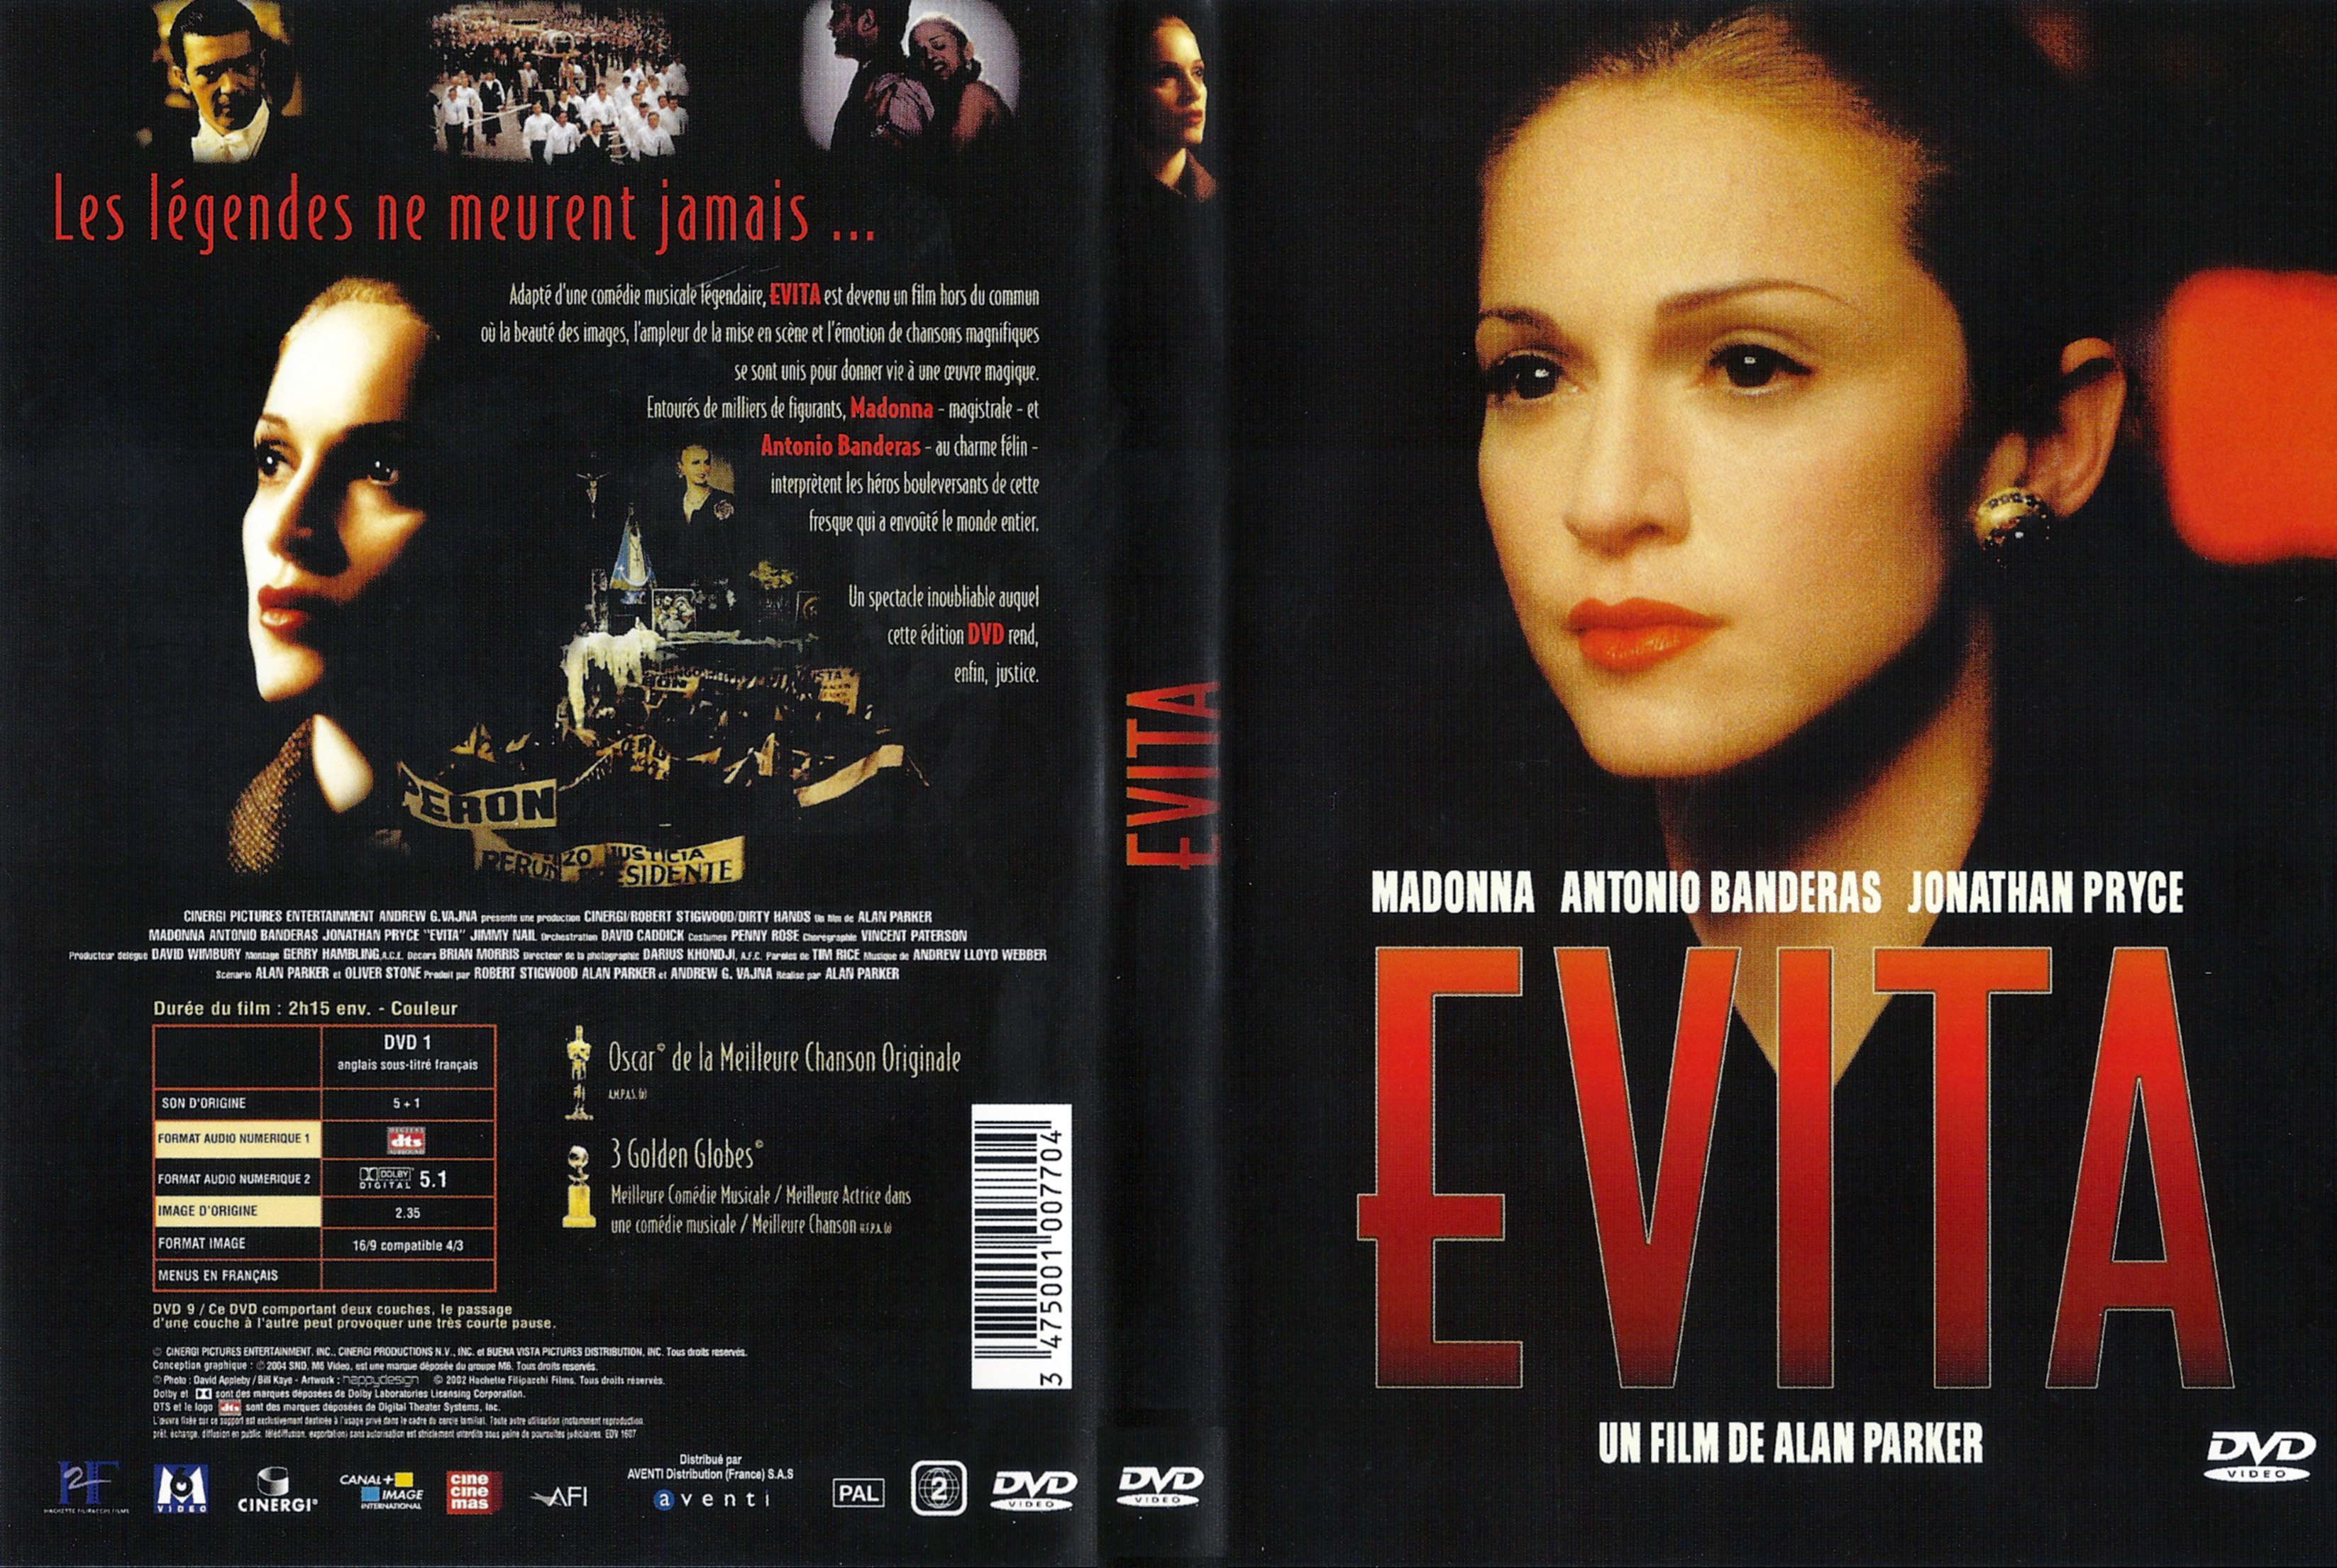 Jaquette DVD Evita v3